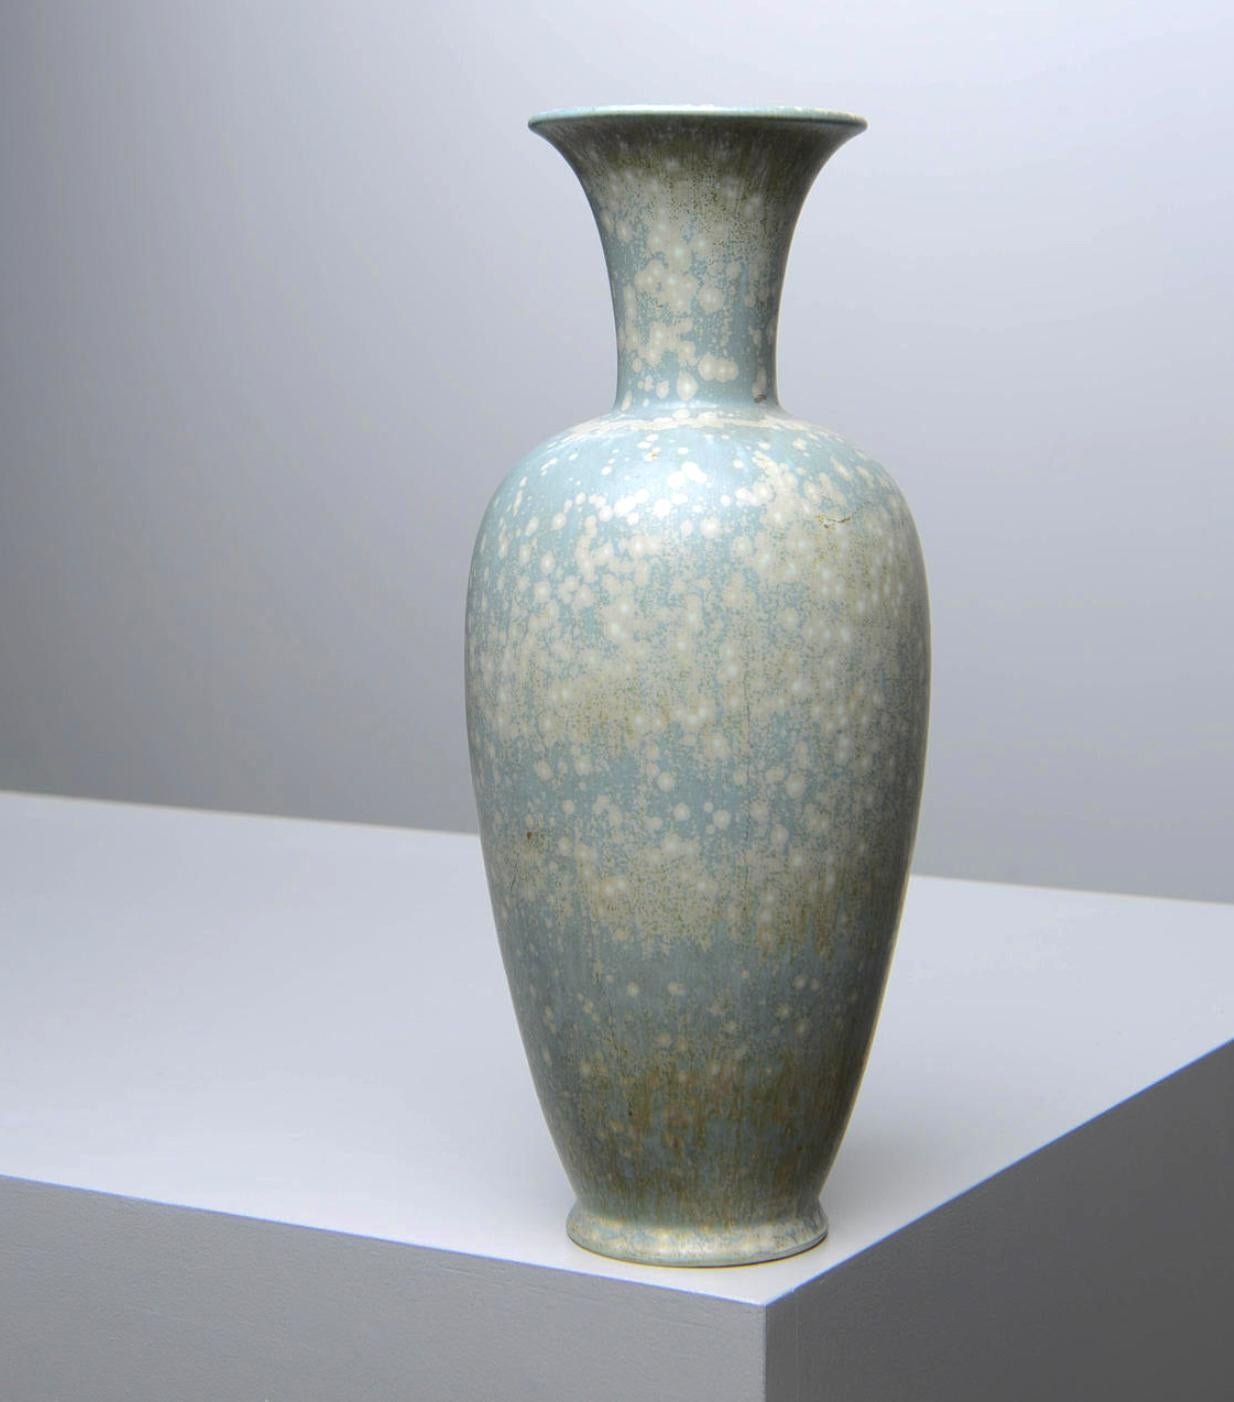 A stoneware vase by Gunnar Nylund for Rostrand. Circa 1950th. Melanged glaze in blue/green/beige shades.
Height 13.5″.